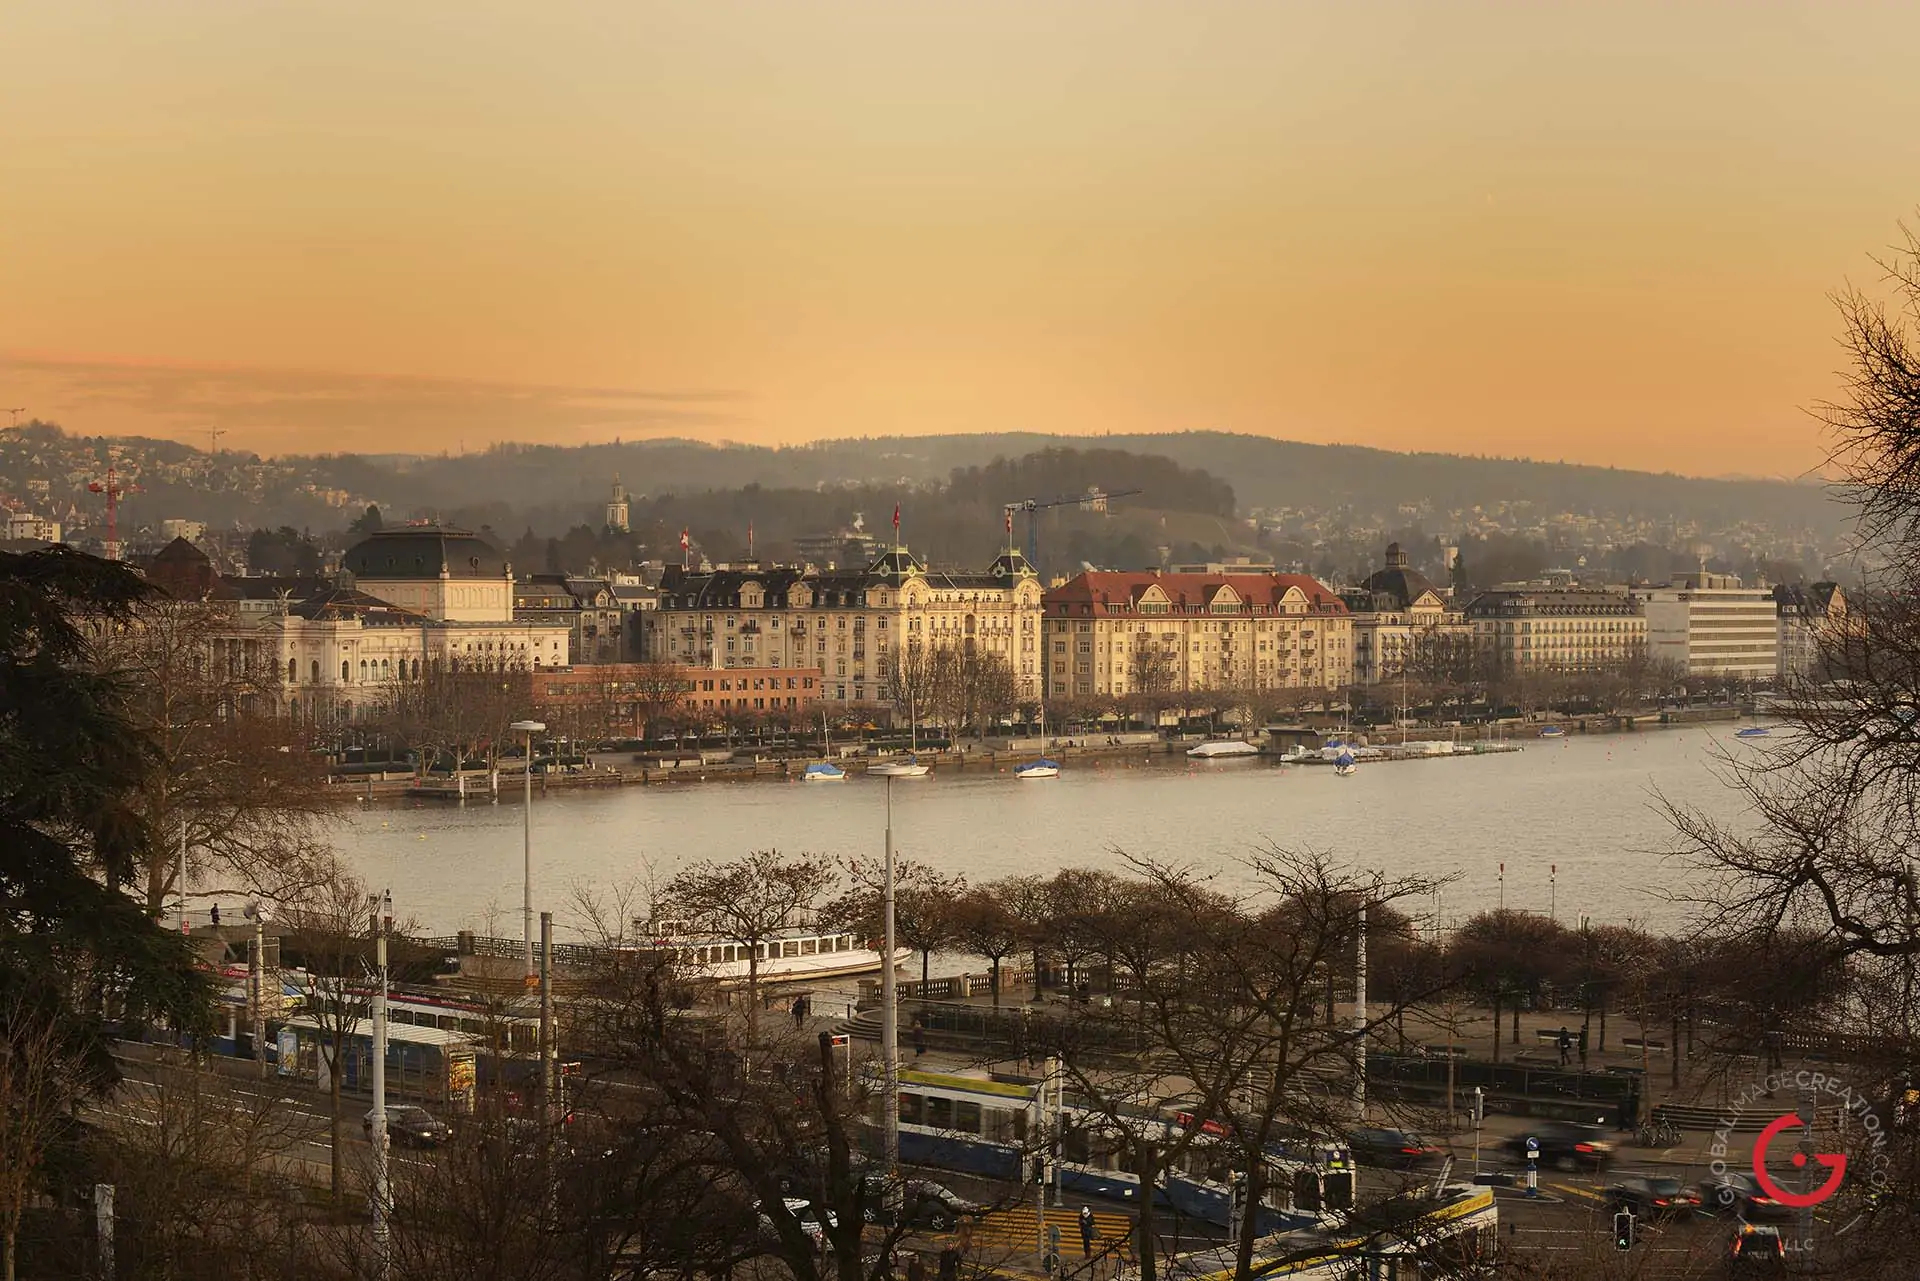 Opera House and Lake Zurich at Sunset - Travel Photographer and Switzerland Photography